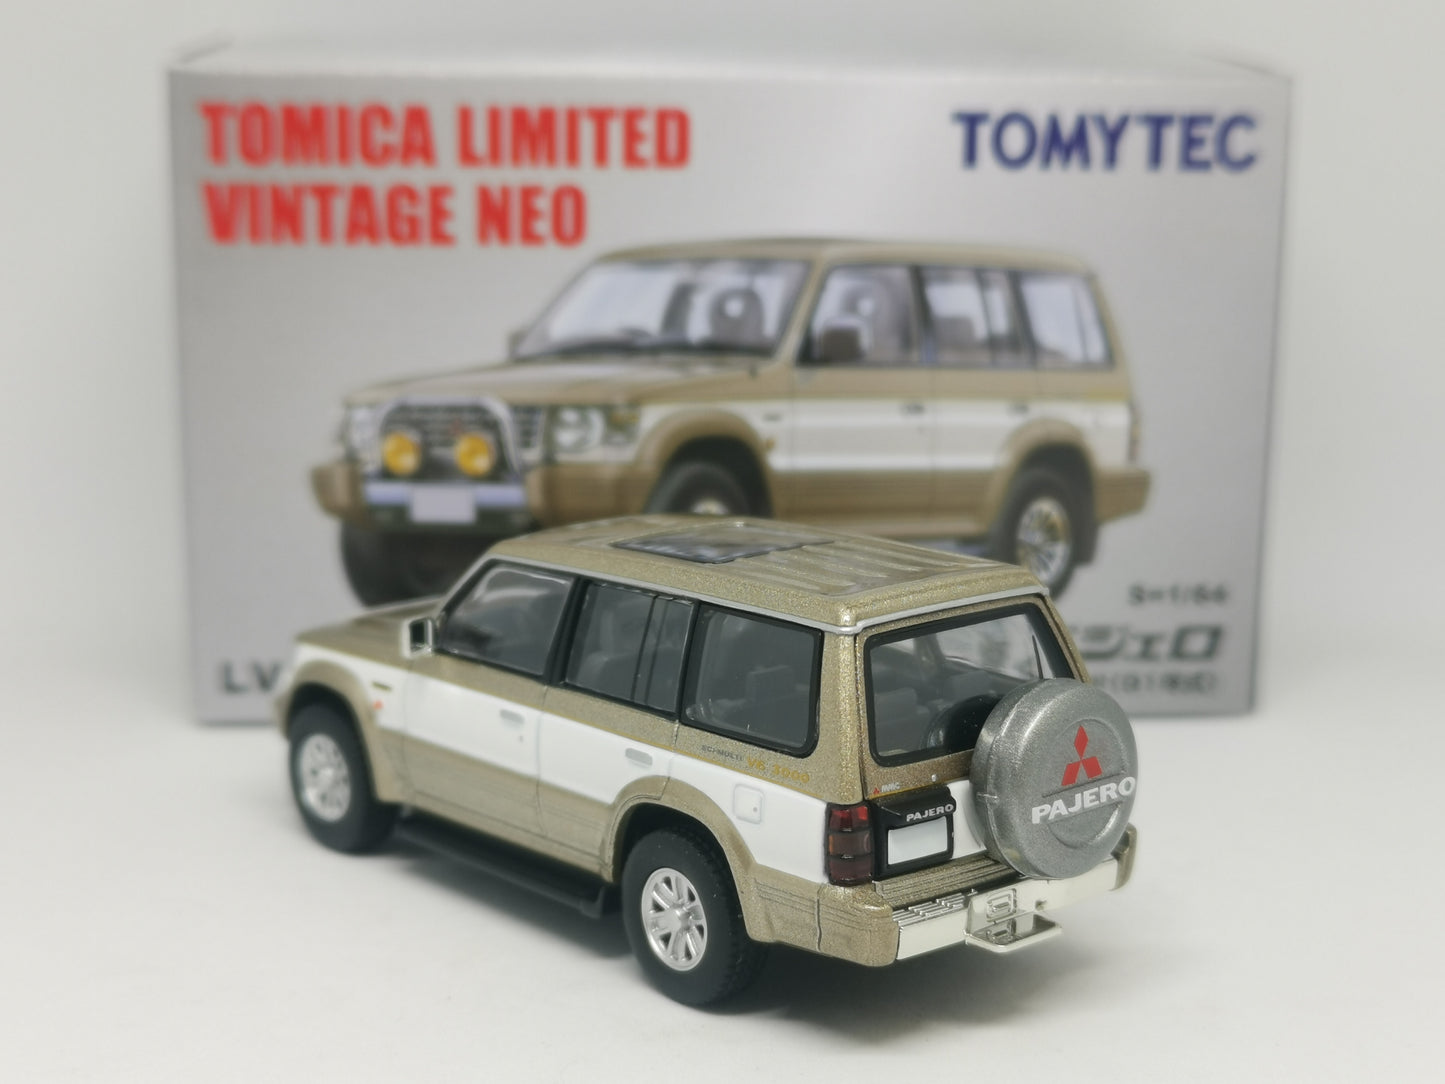 Tomytec Limited Vintage Neo LV-N189c Mitsubishi Pajero Super Exceed (Beige/White)